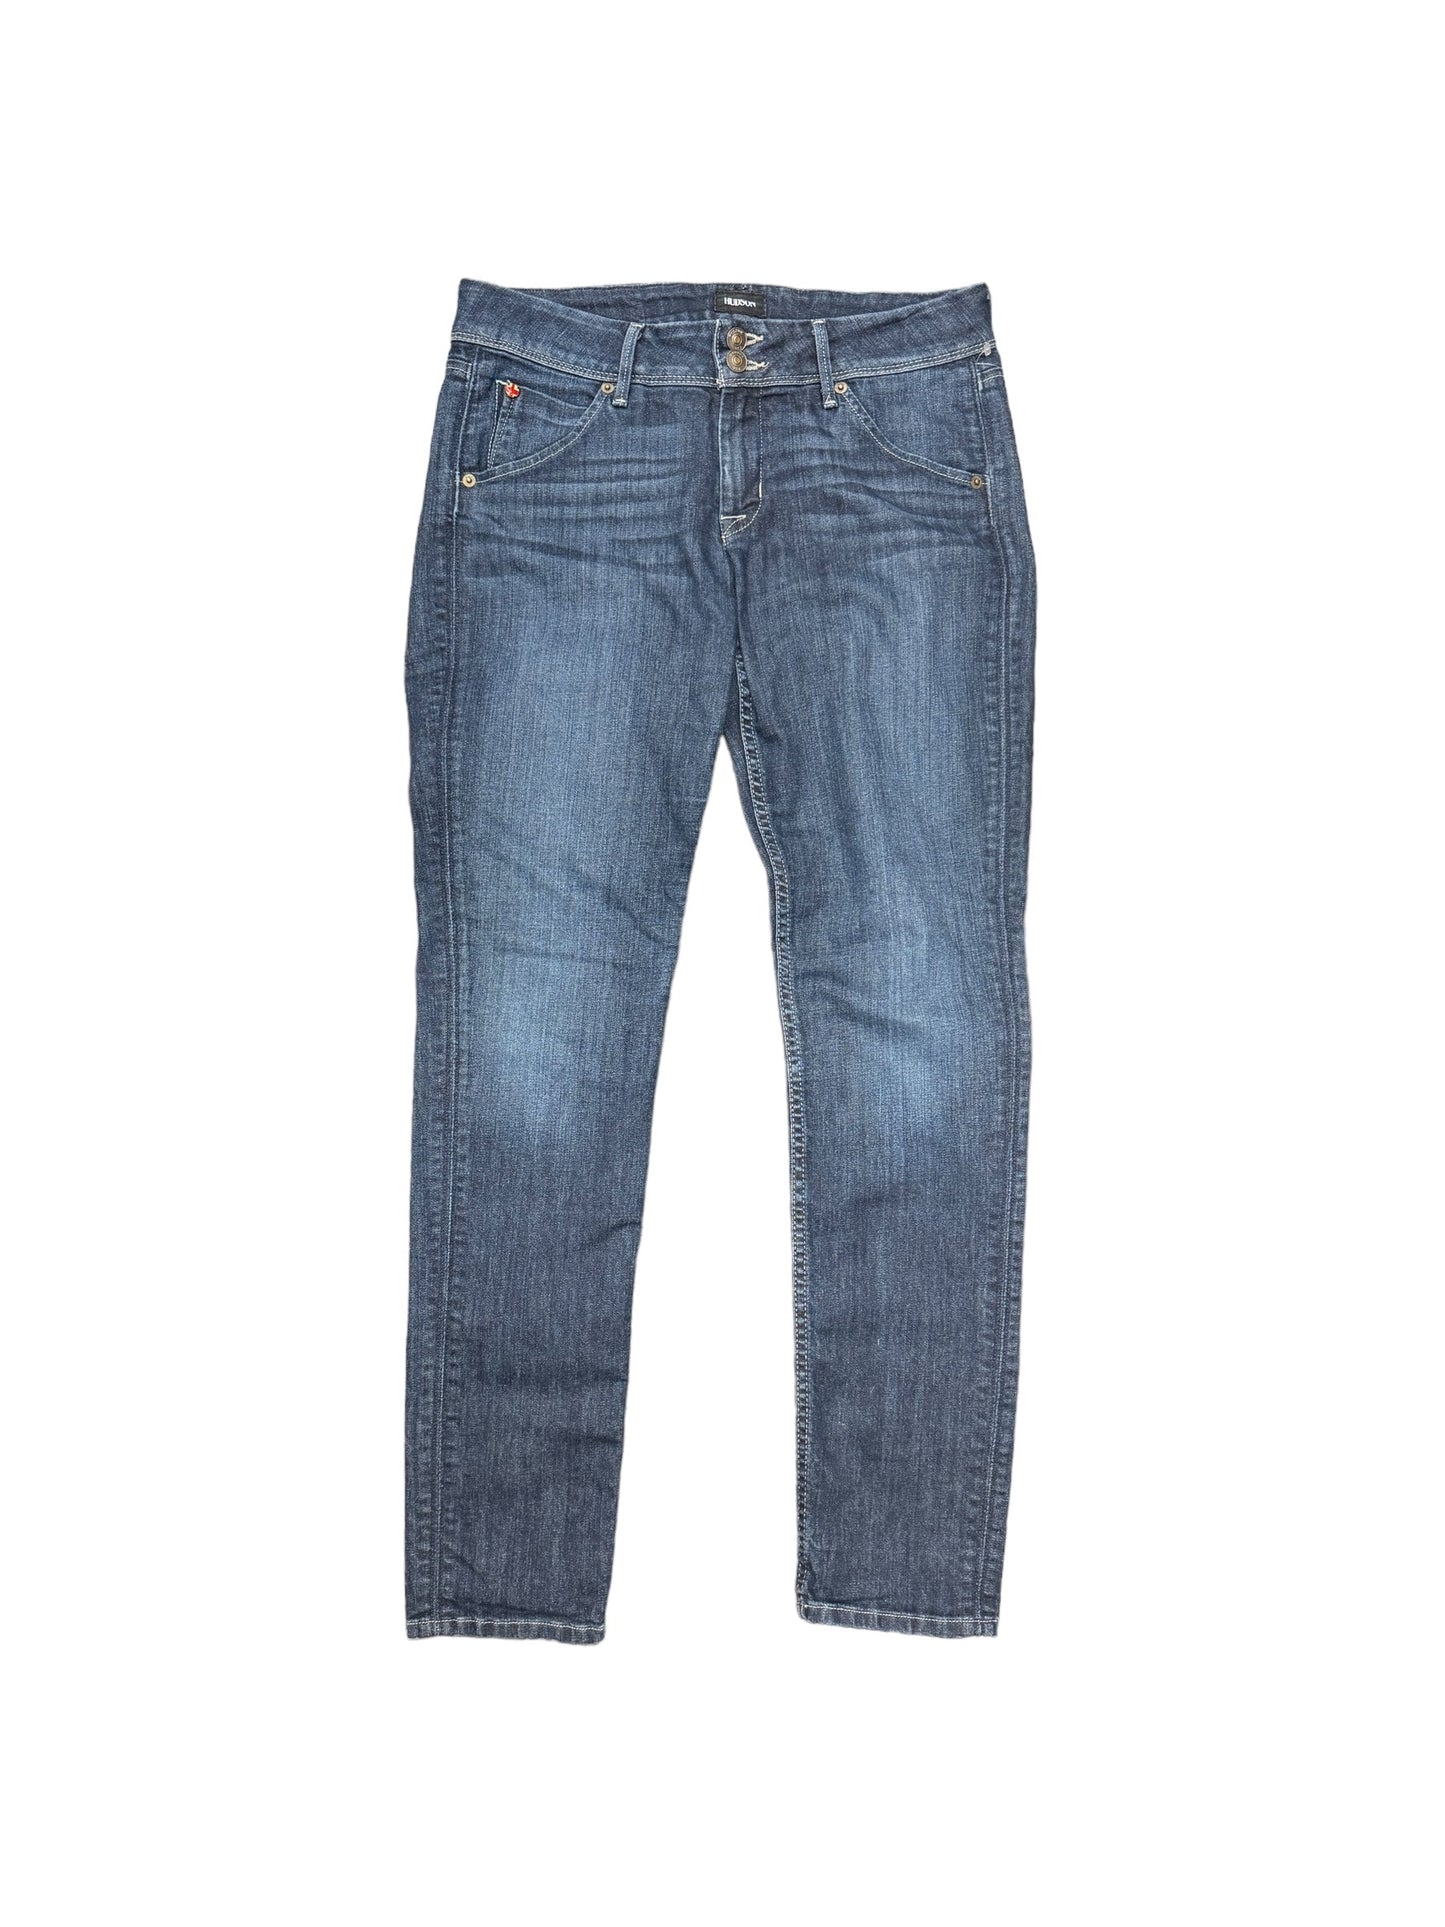 Blue Denim Jeans Skinny Hudson, Size 8